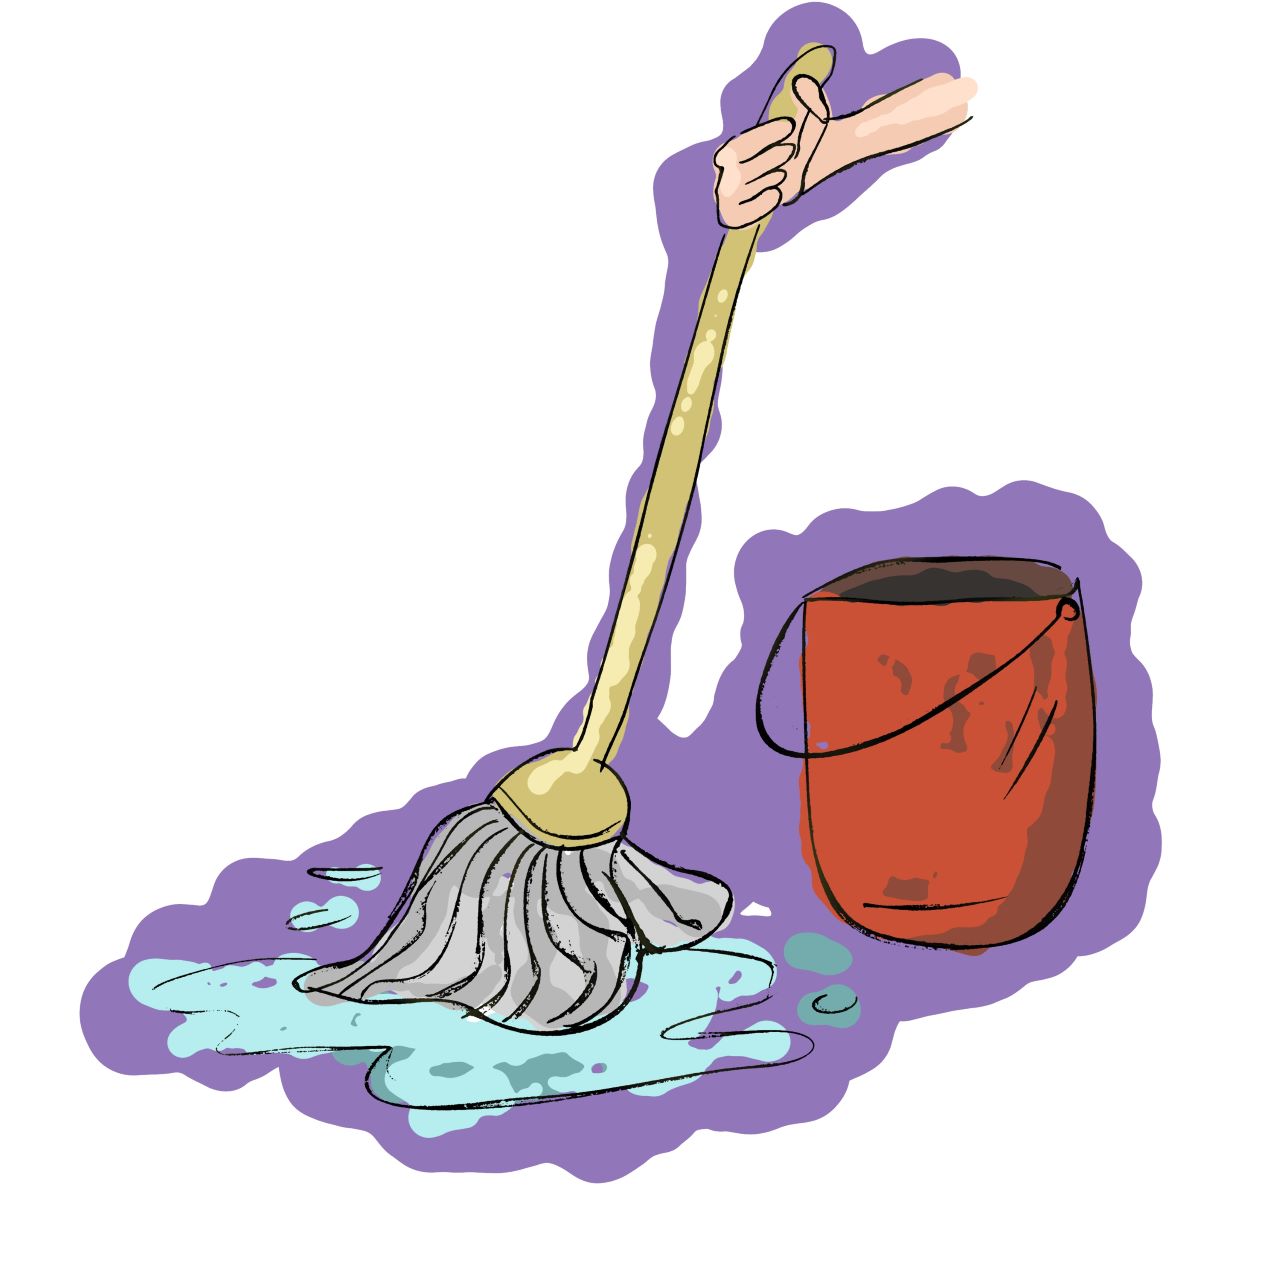 Ilustracijom je prikazano pranje poda s kantom i mopom.